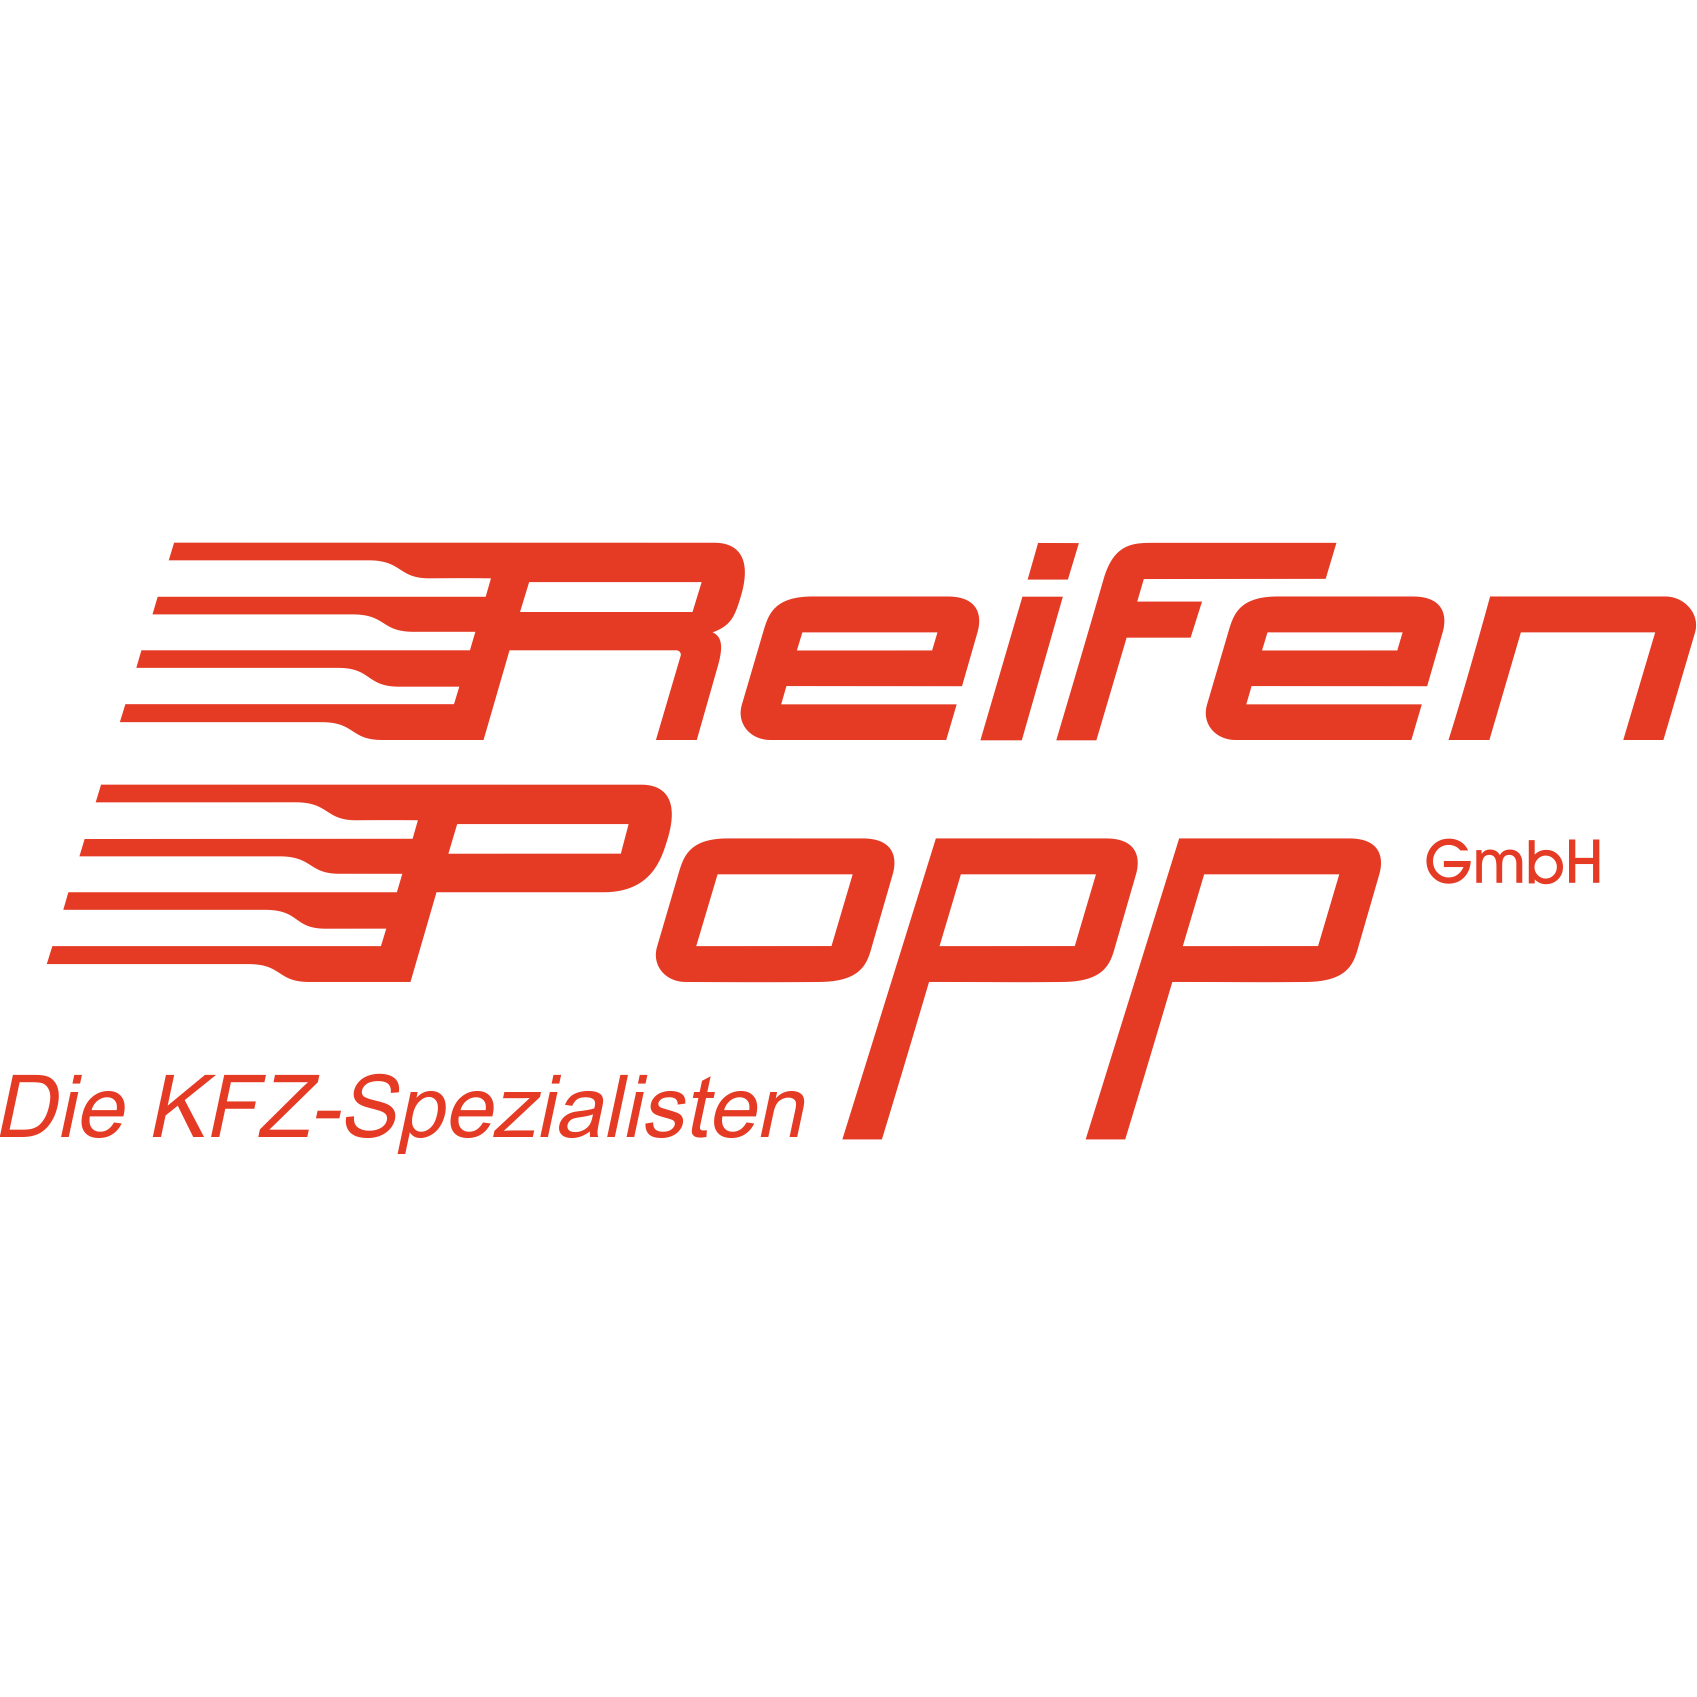 Reifen Popp GmbH Logo